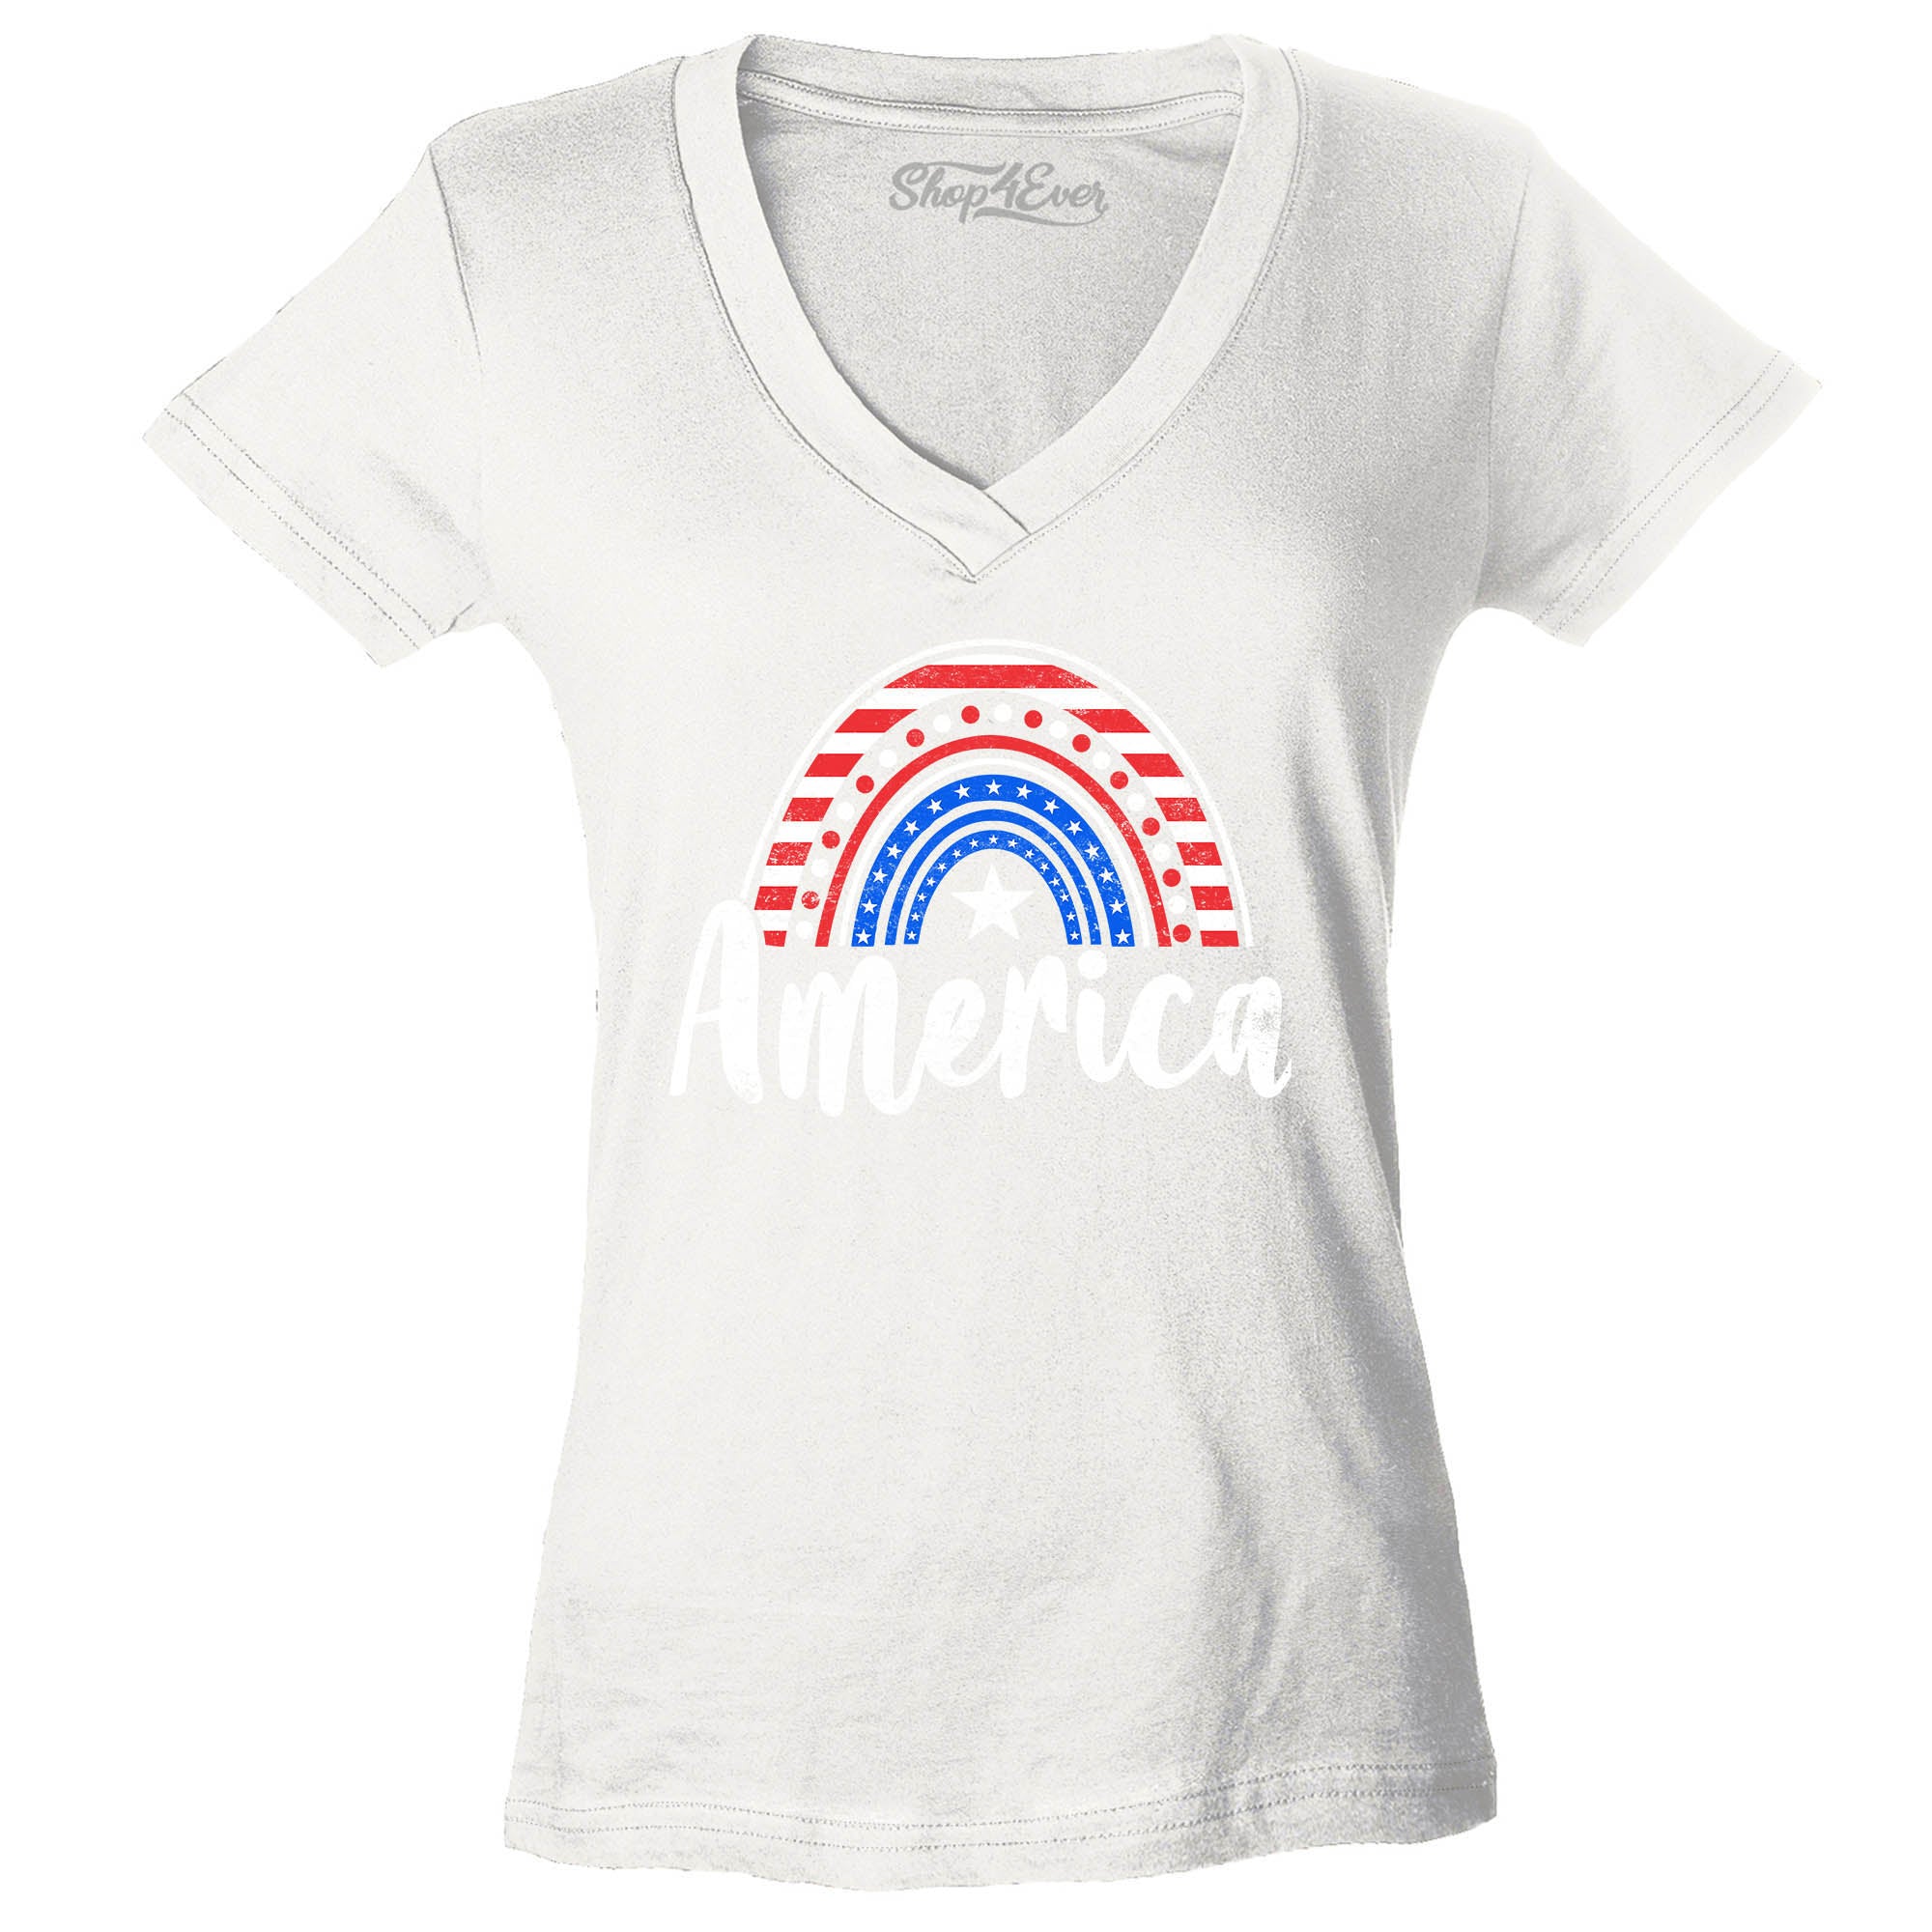 America Patriotic Rainbow 4th of July Women's V-Neck T-Shirt Slim Fit